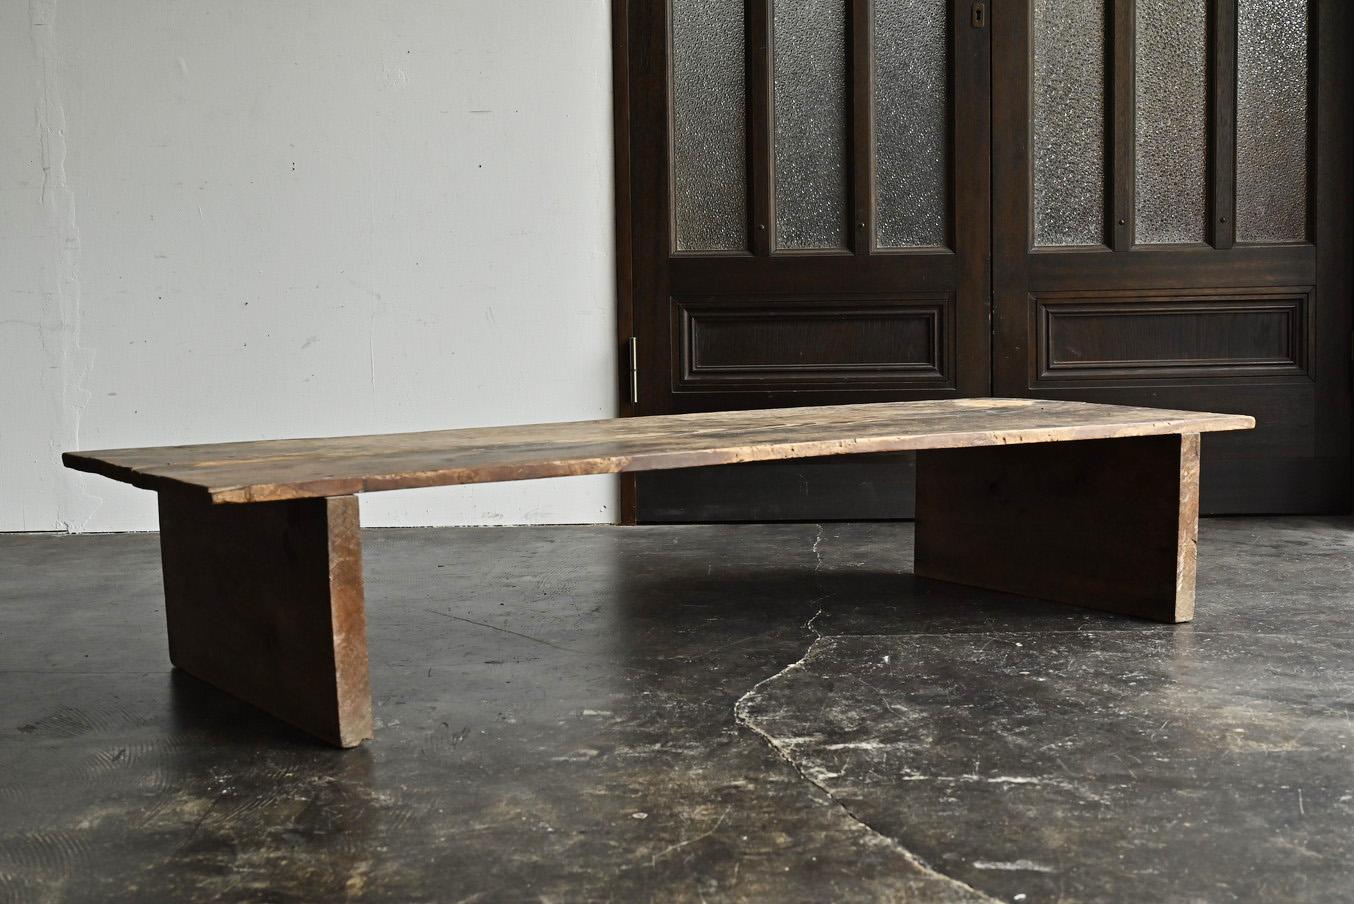 Japanese antique wooden low table/1868-1920/Wabisabi wood grain 2